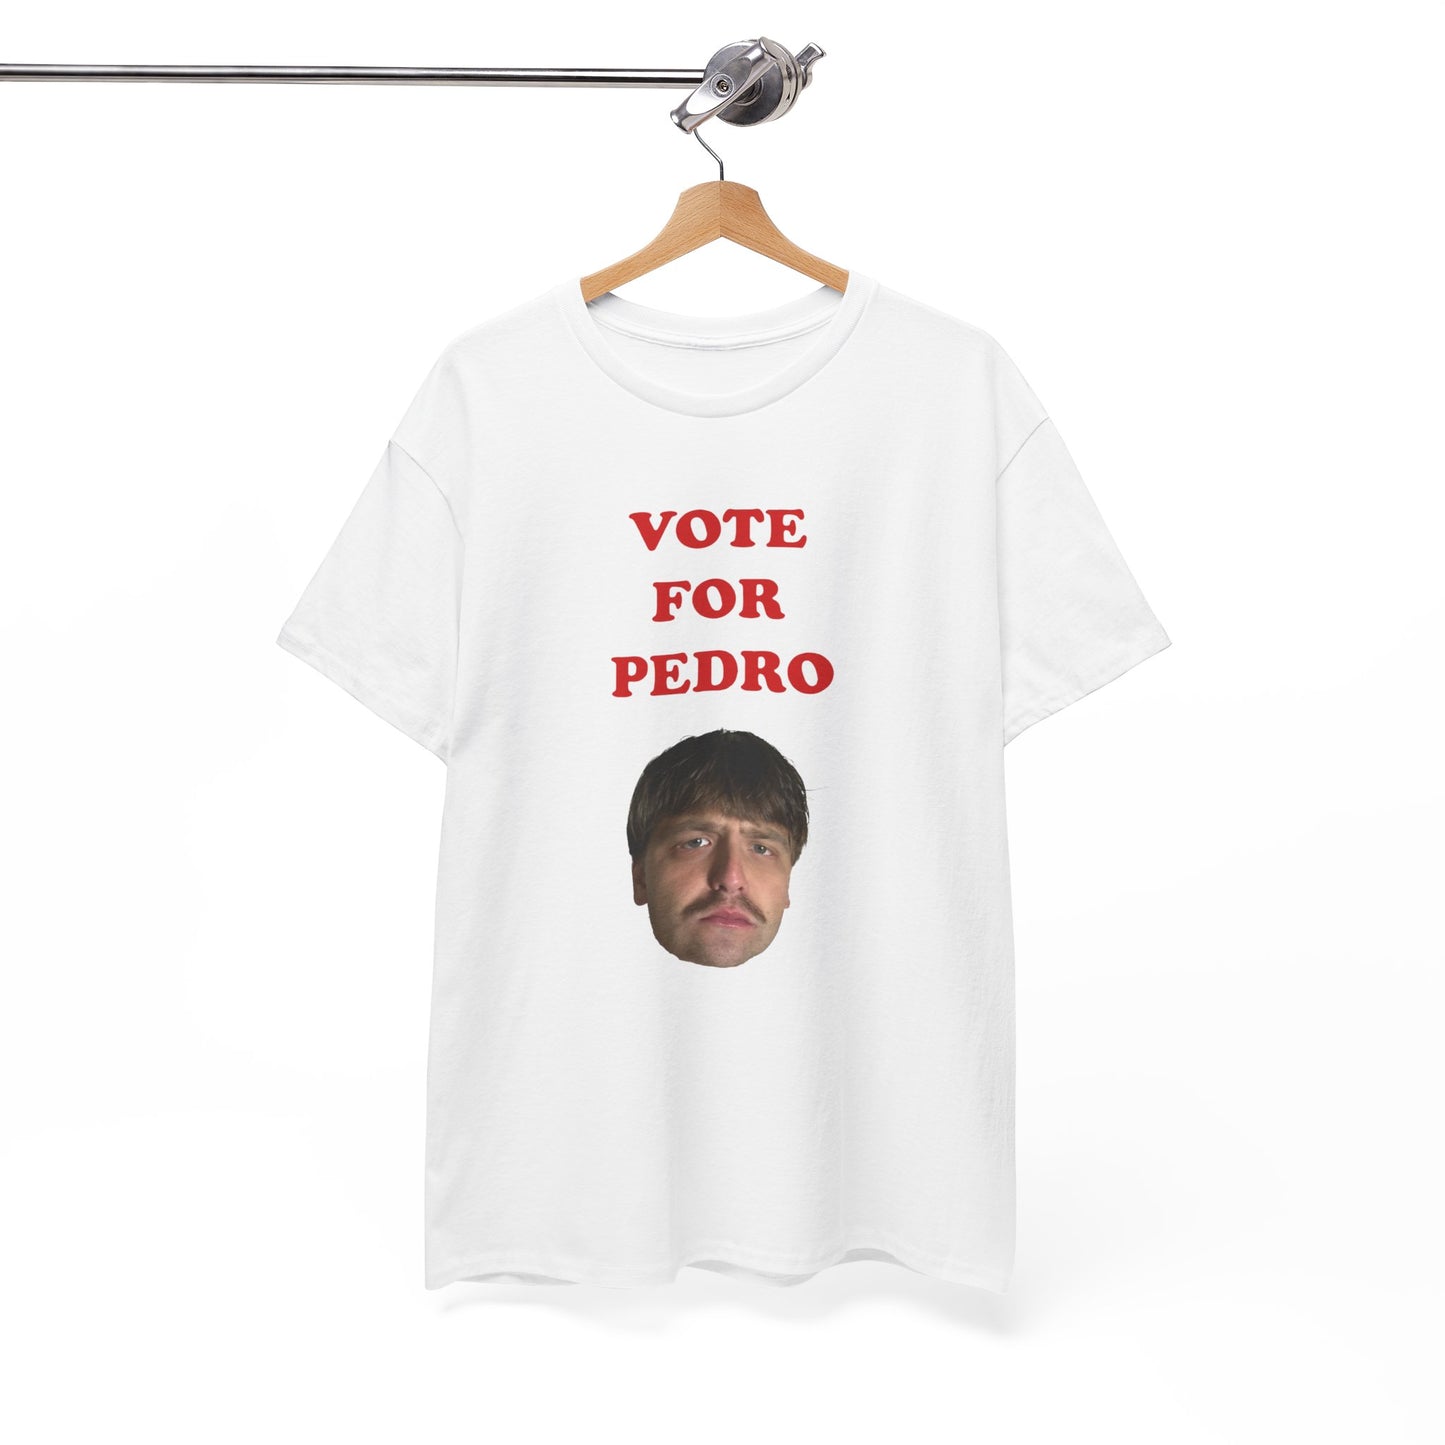 VOTE FOR PEDRO - Tee